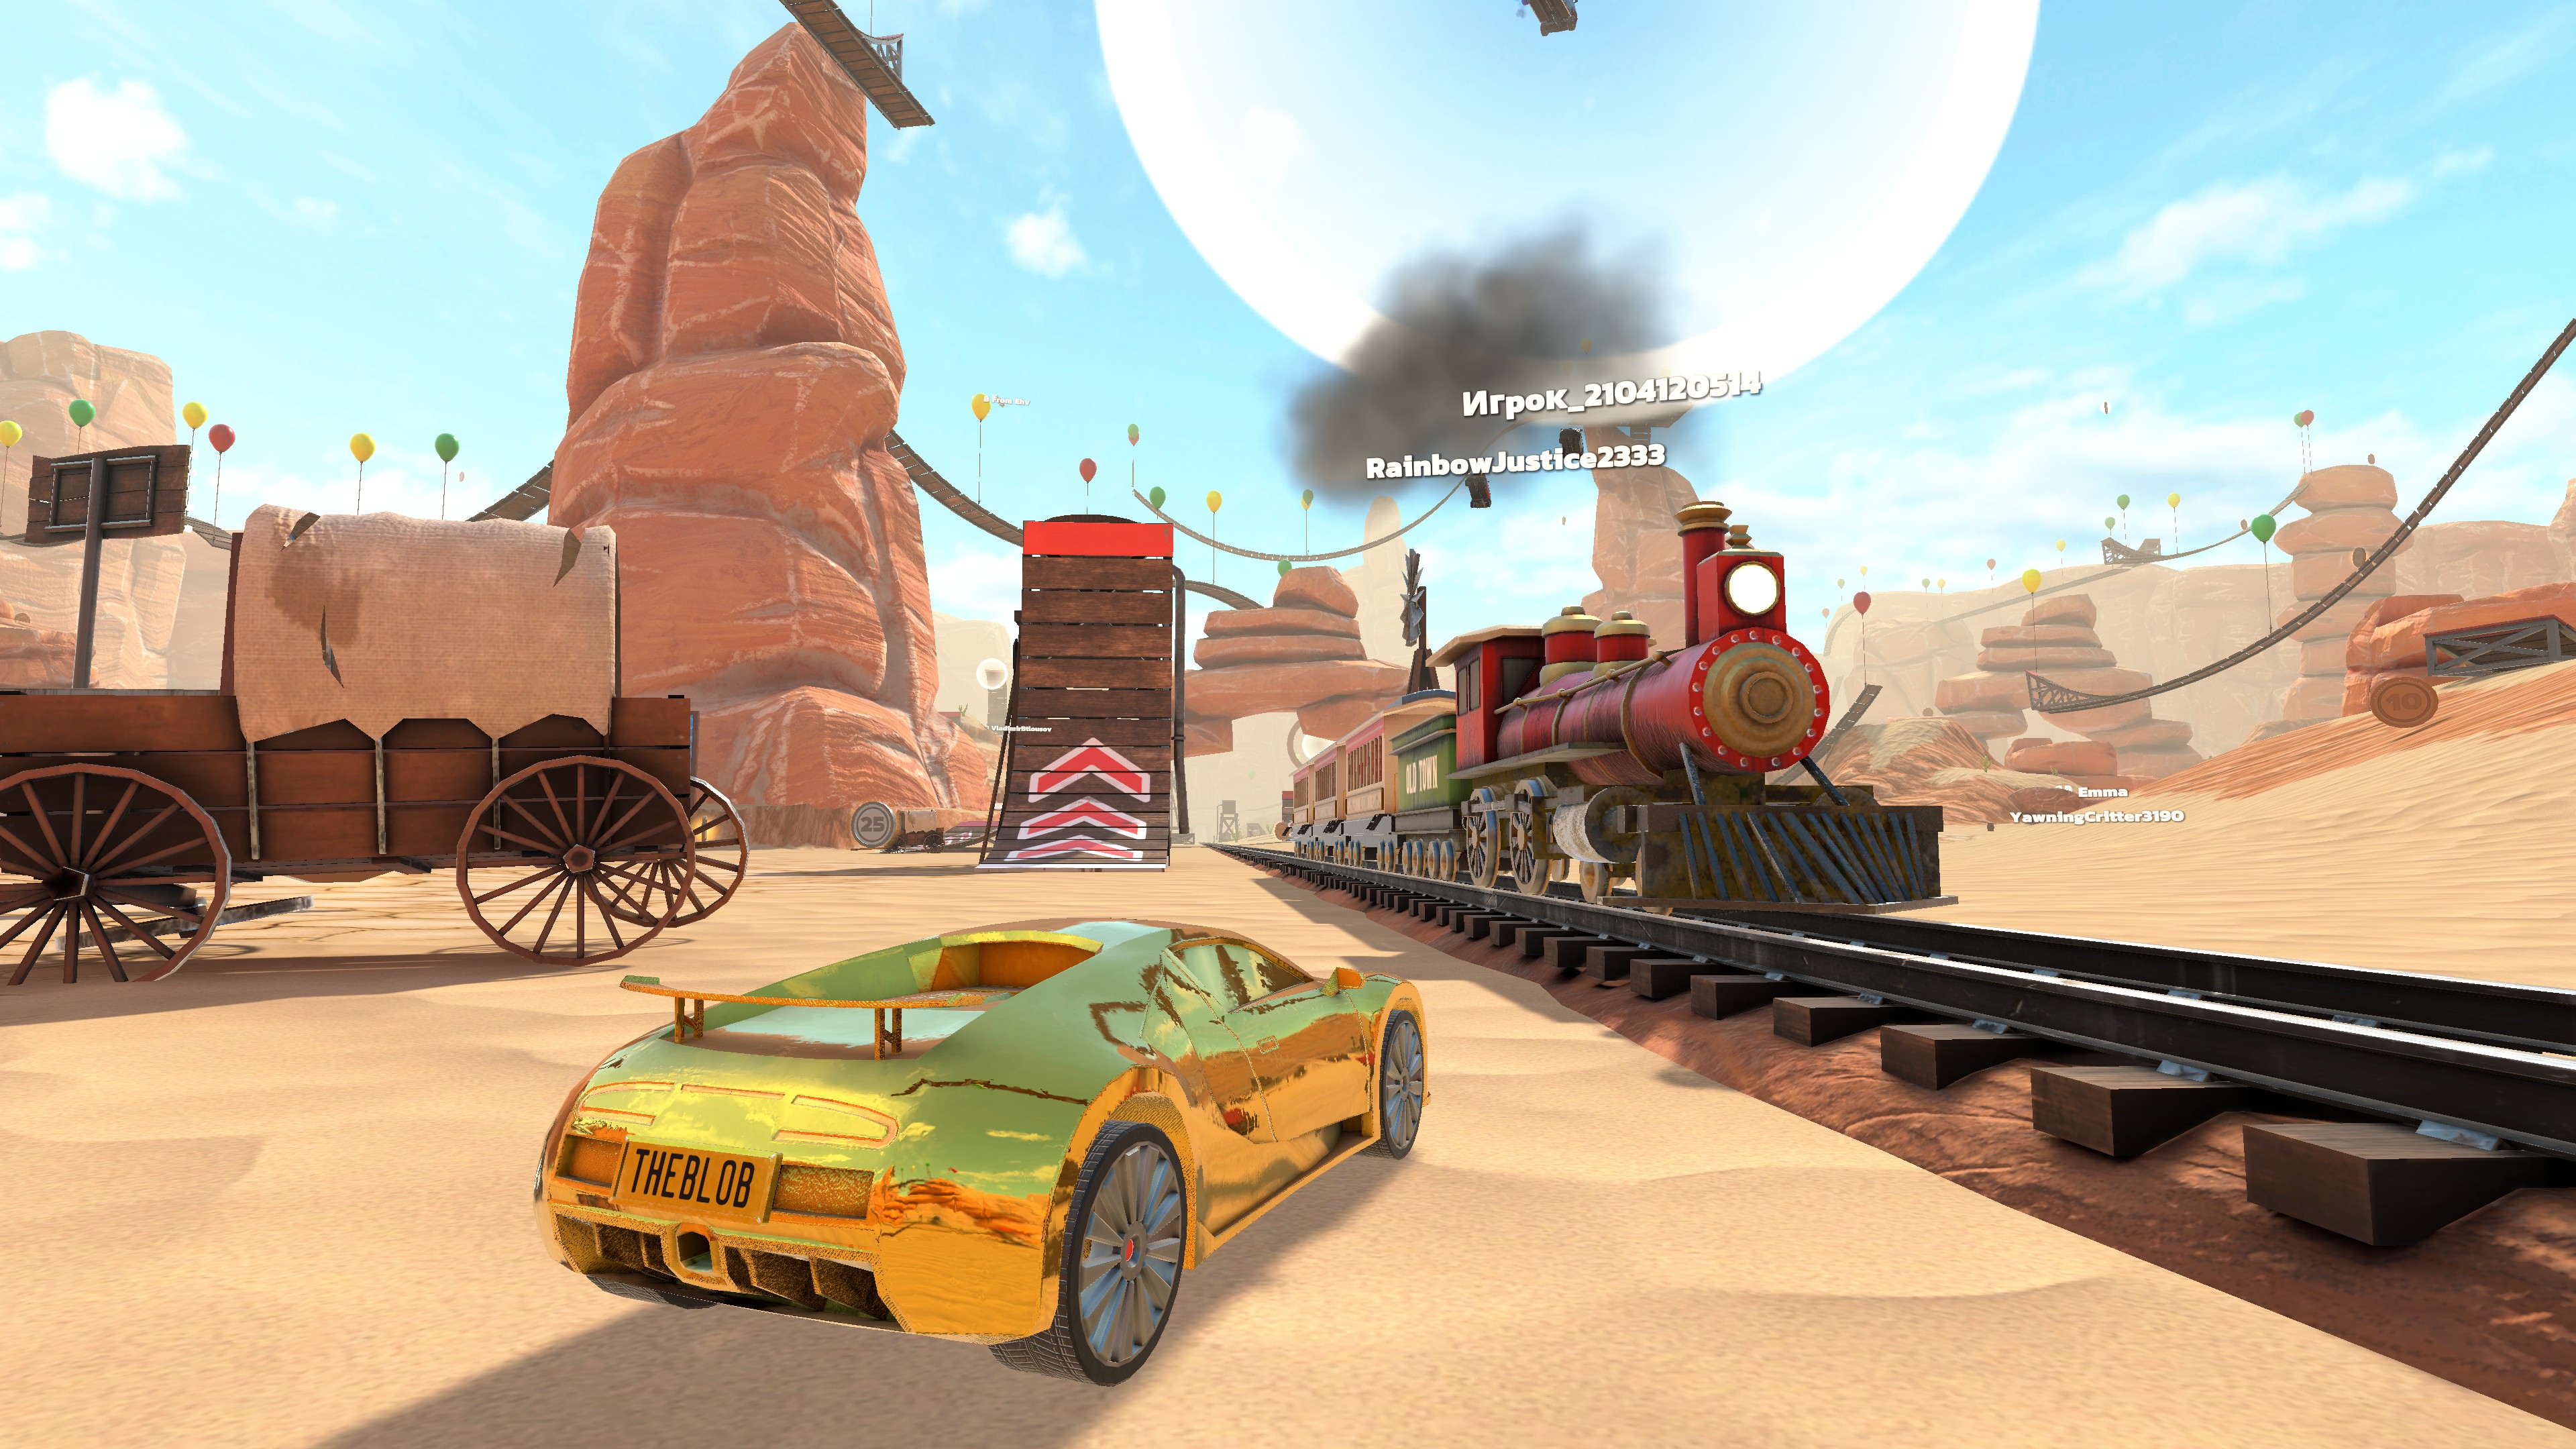 Crash Drive 3: Car Stunting - Apps on Google Play